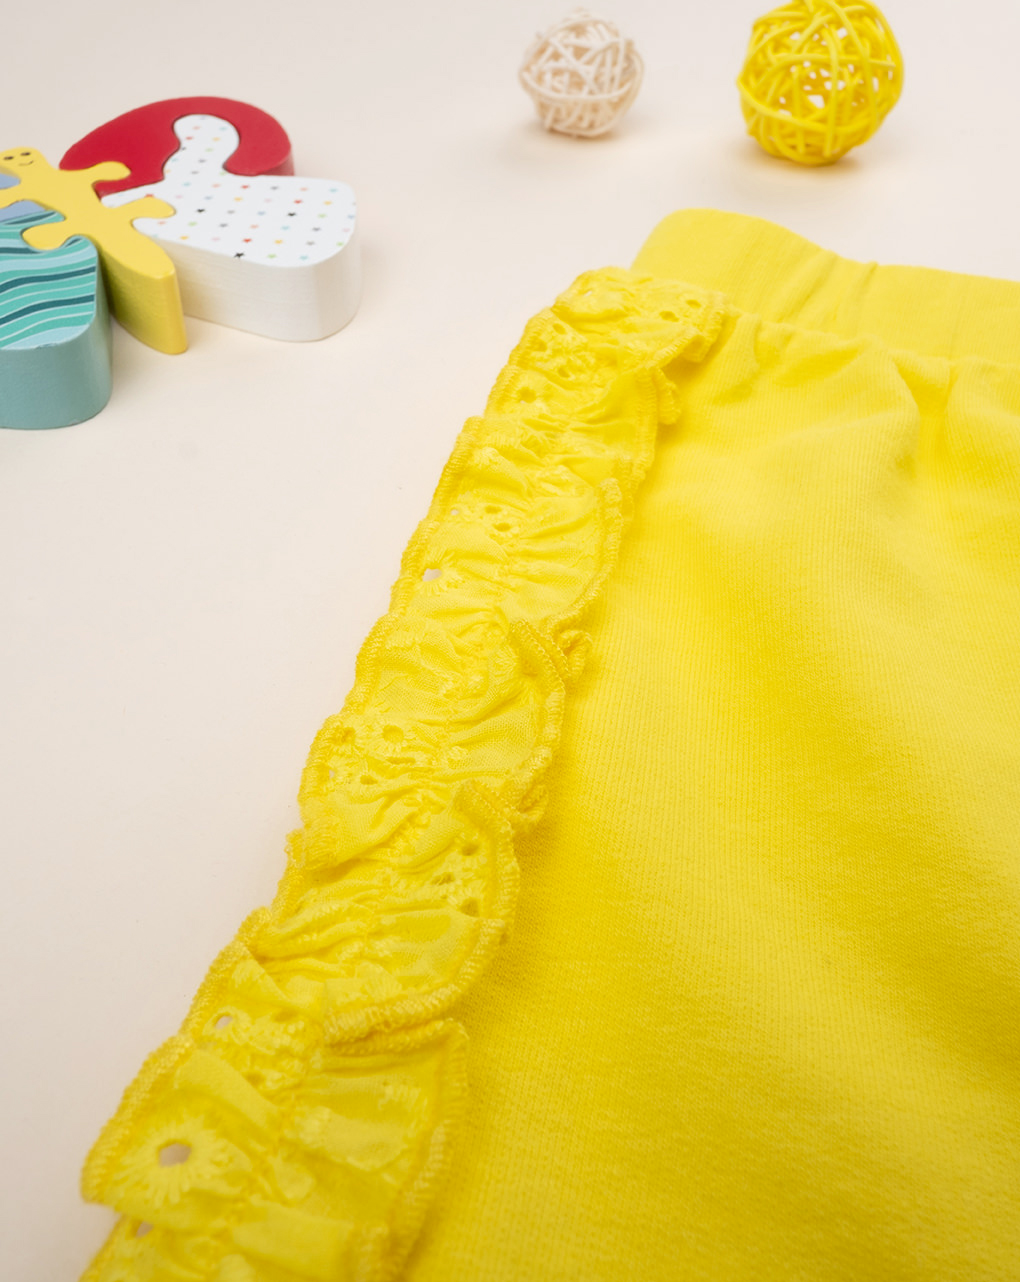 Pantalón corto amarillo de niña de rizo francés y sangallo - Prénatal